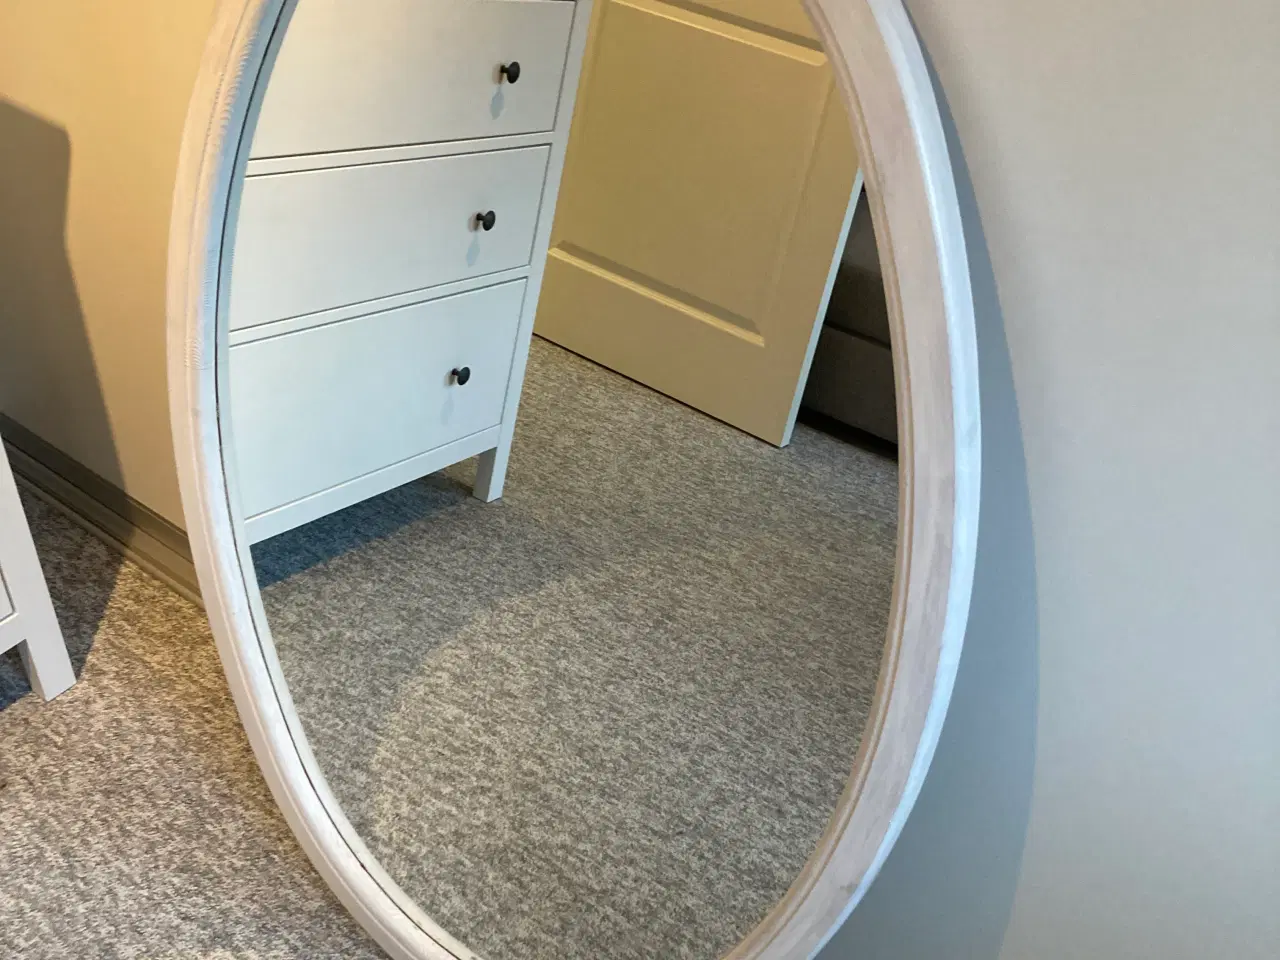 Billede 1 - Fin oval spejl